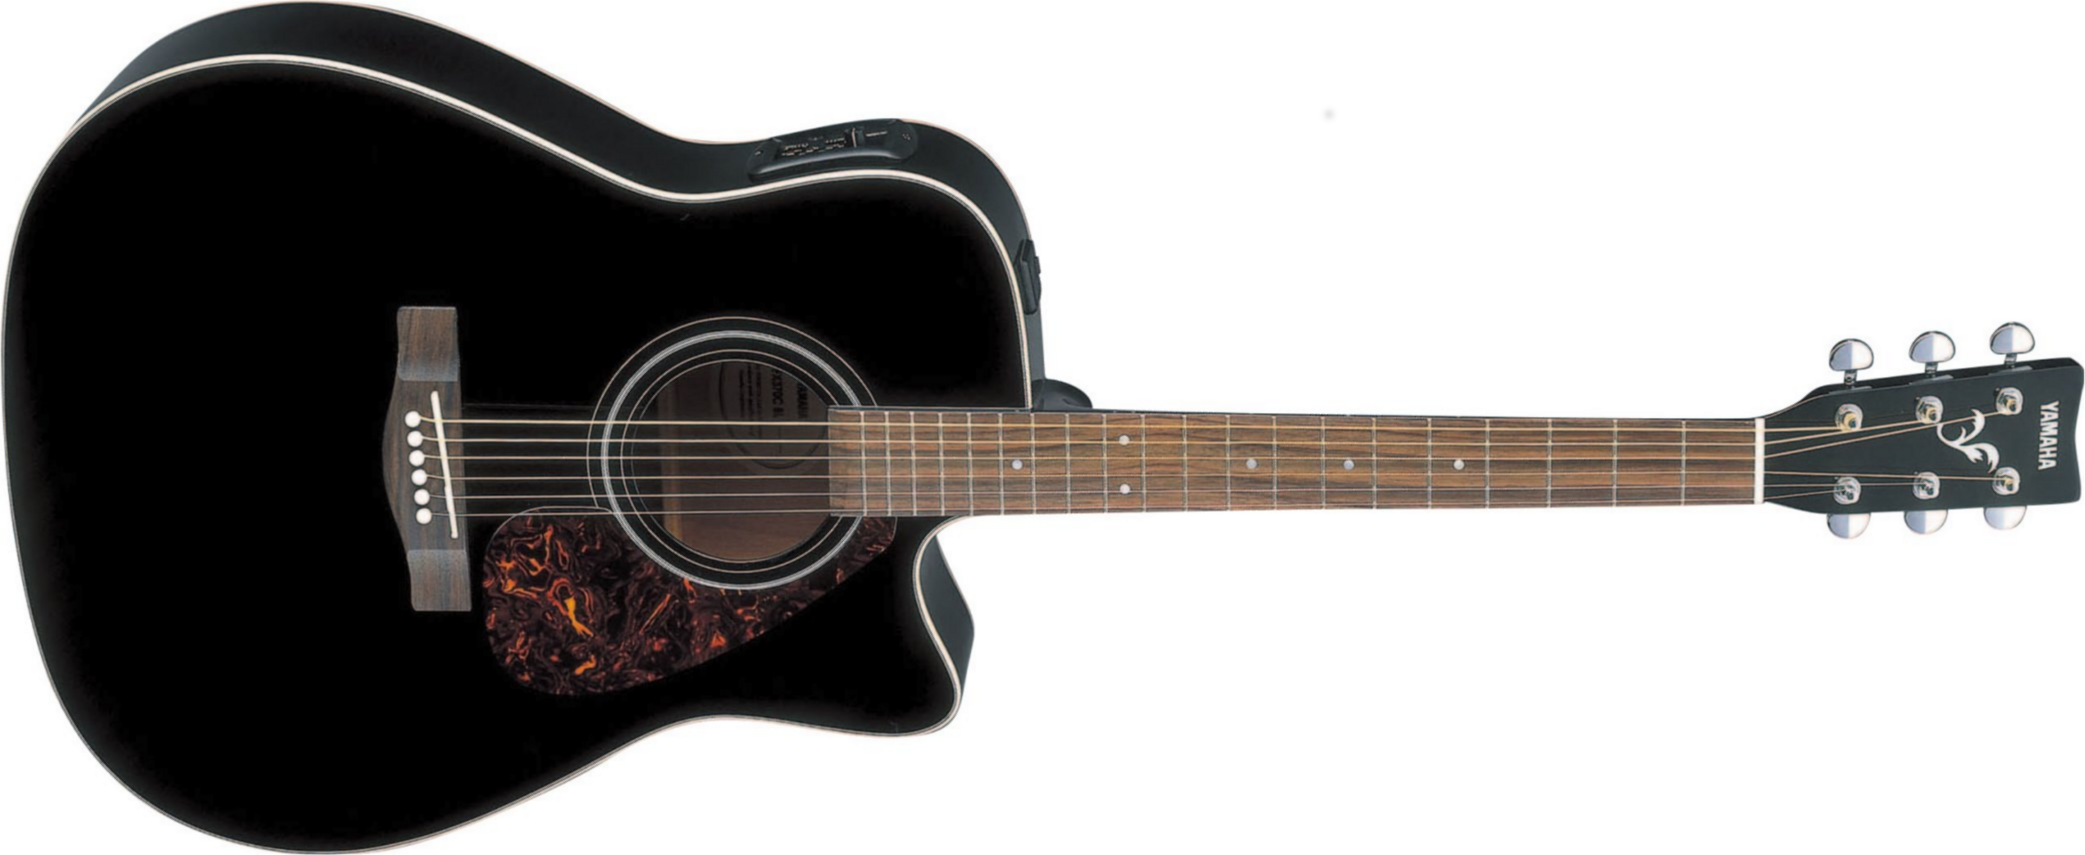 Yamaha Fx370c - Black - Electro acoustic guitar - Main picture